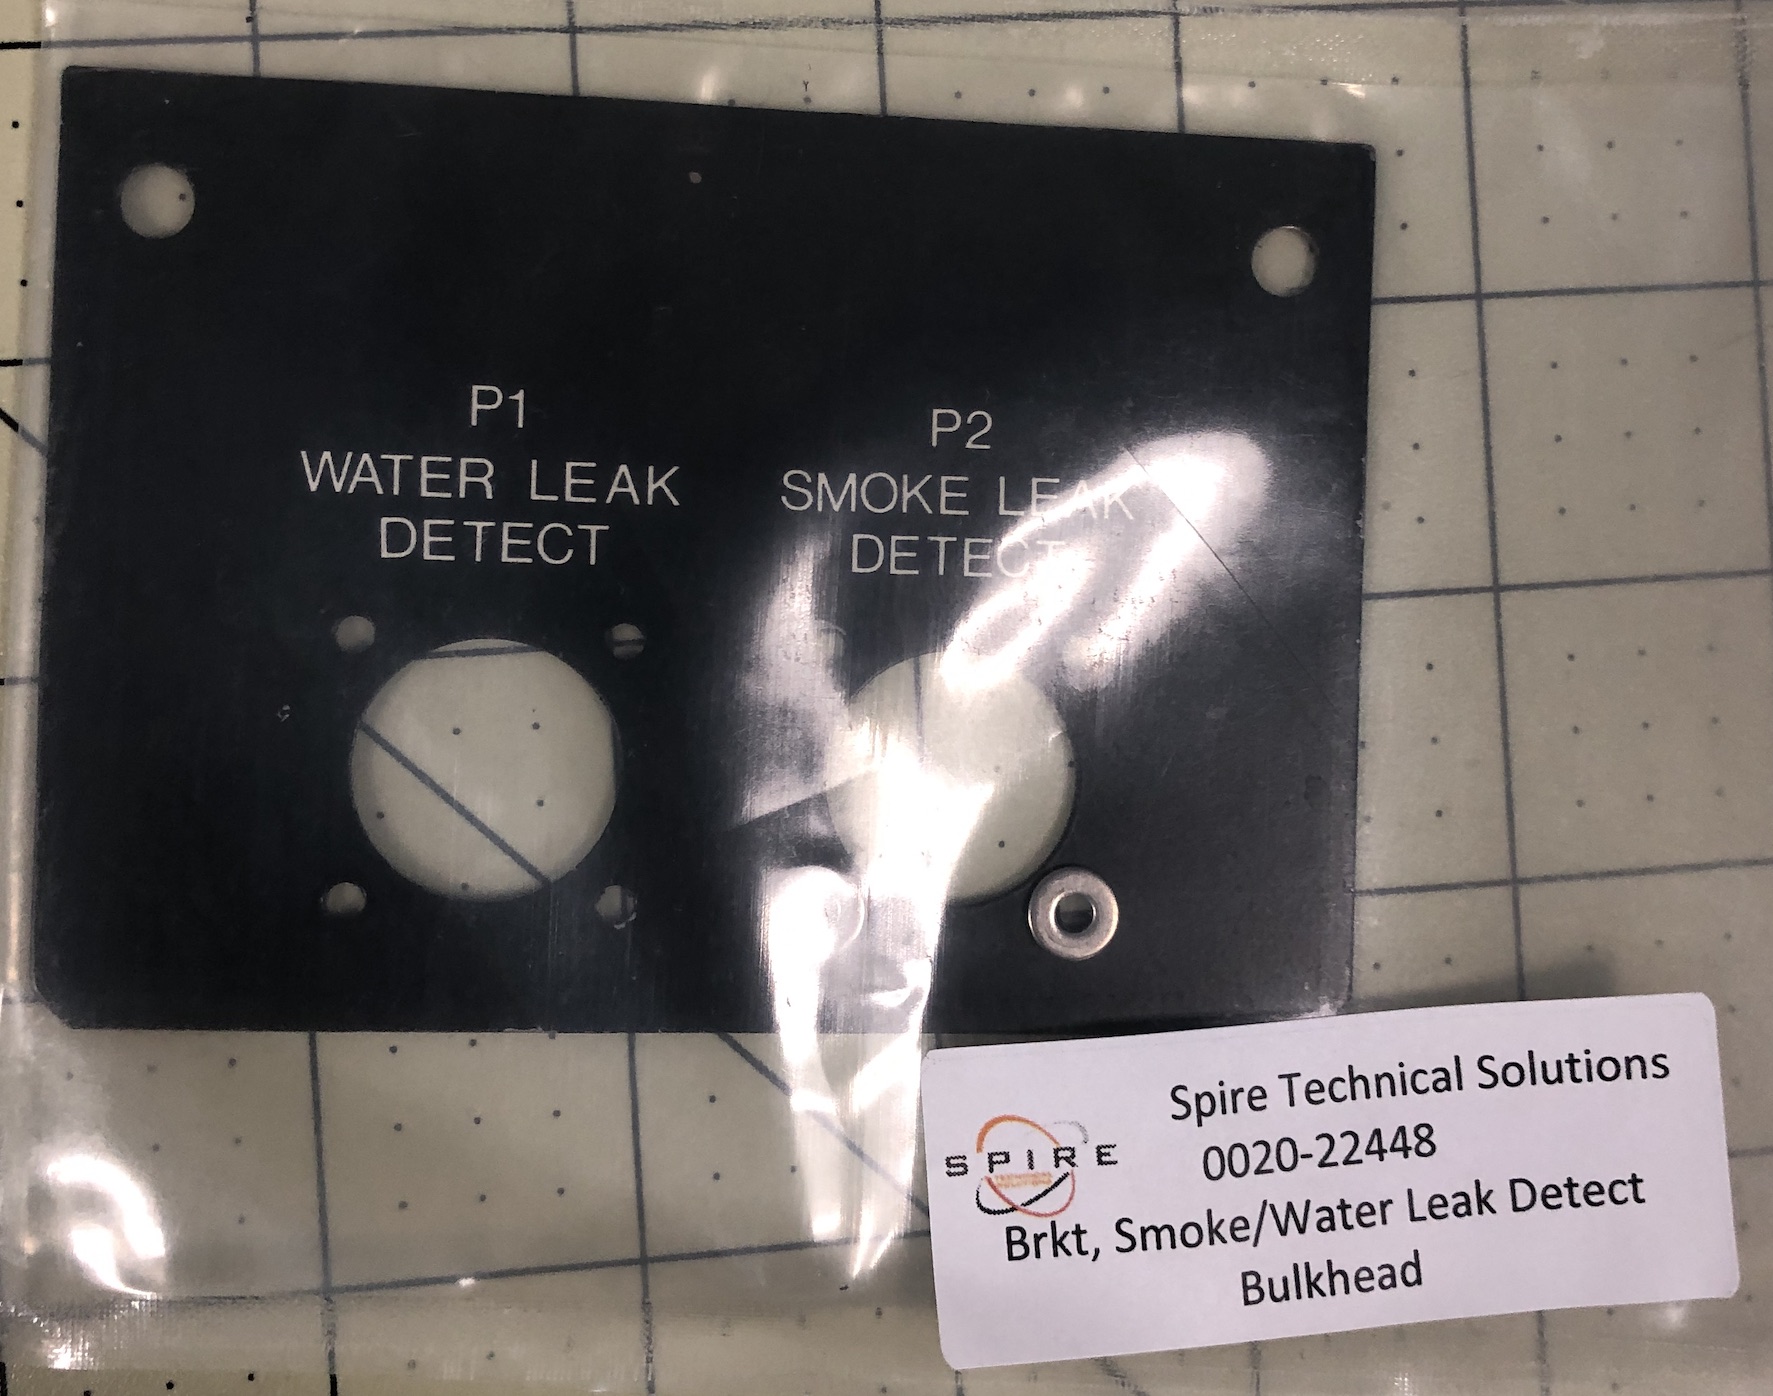 Brkt, Smoke/Water Leak Detect Bulkhead